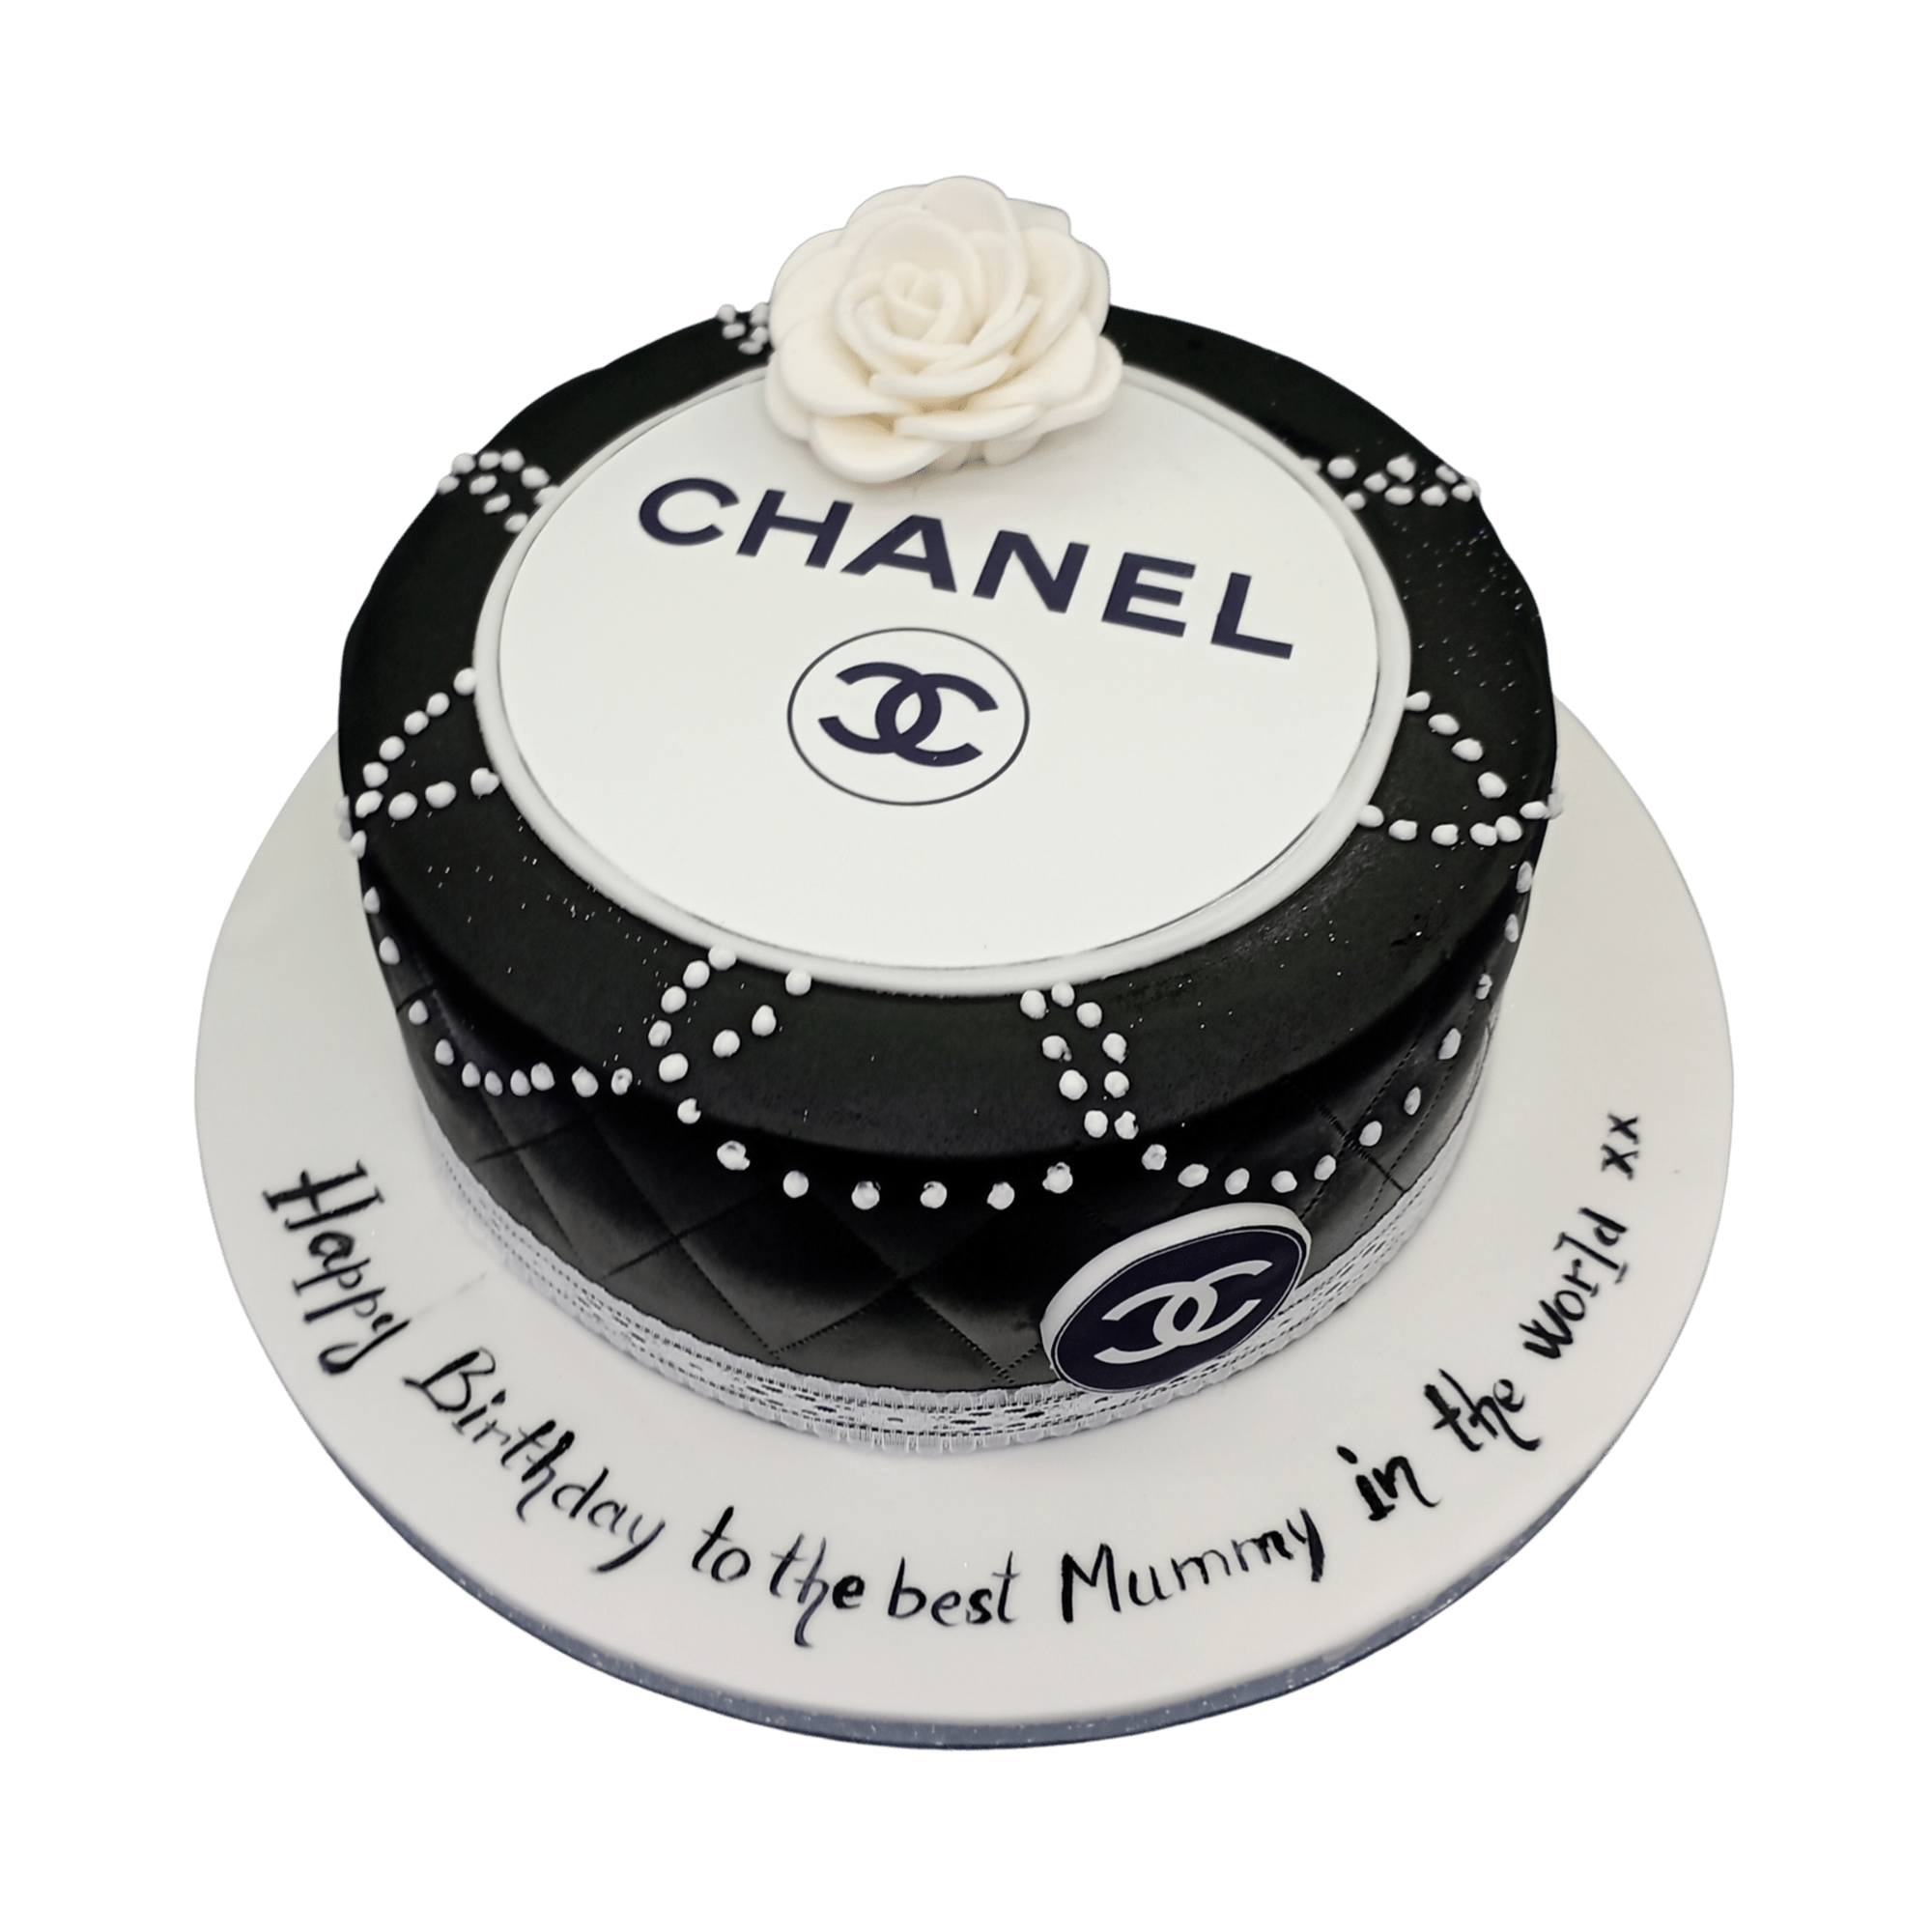 Chanel Birthday Cake 